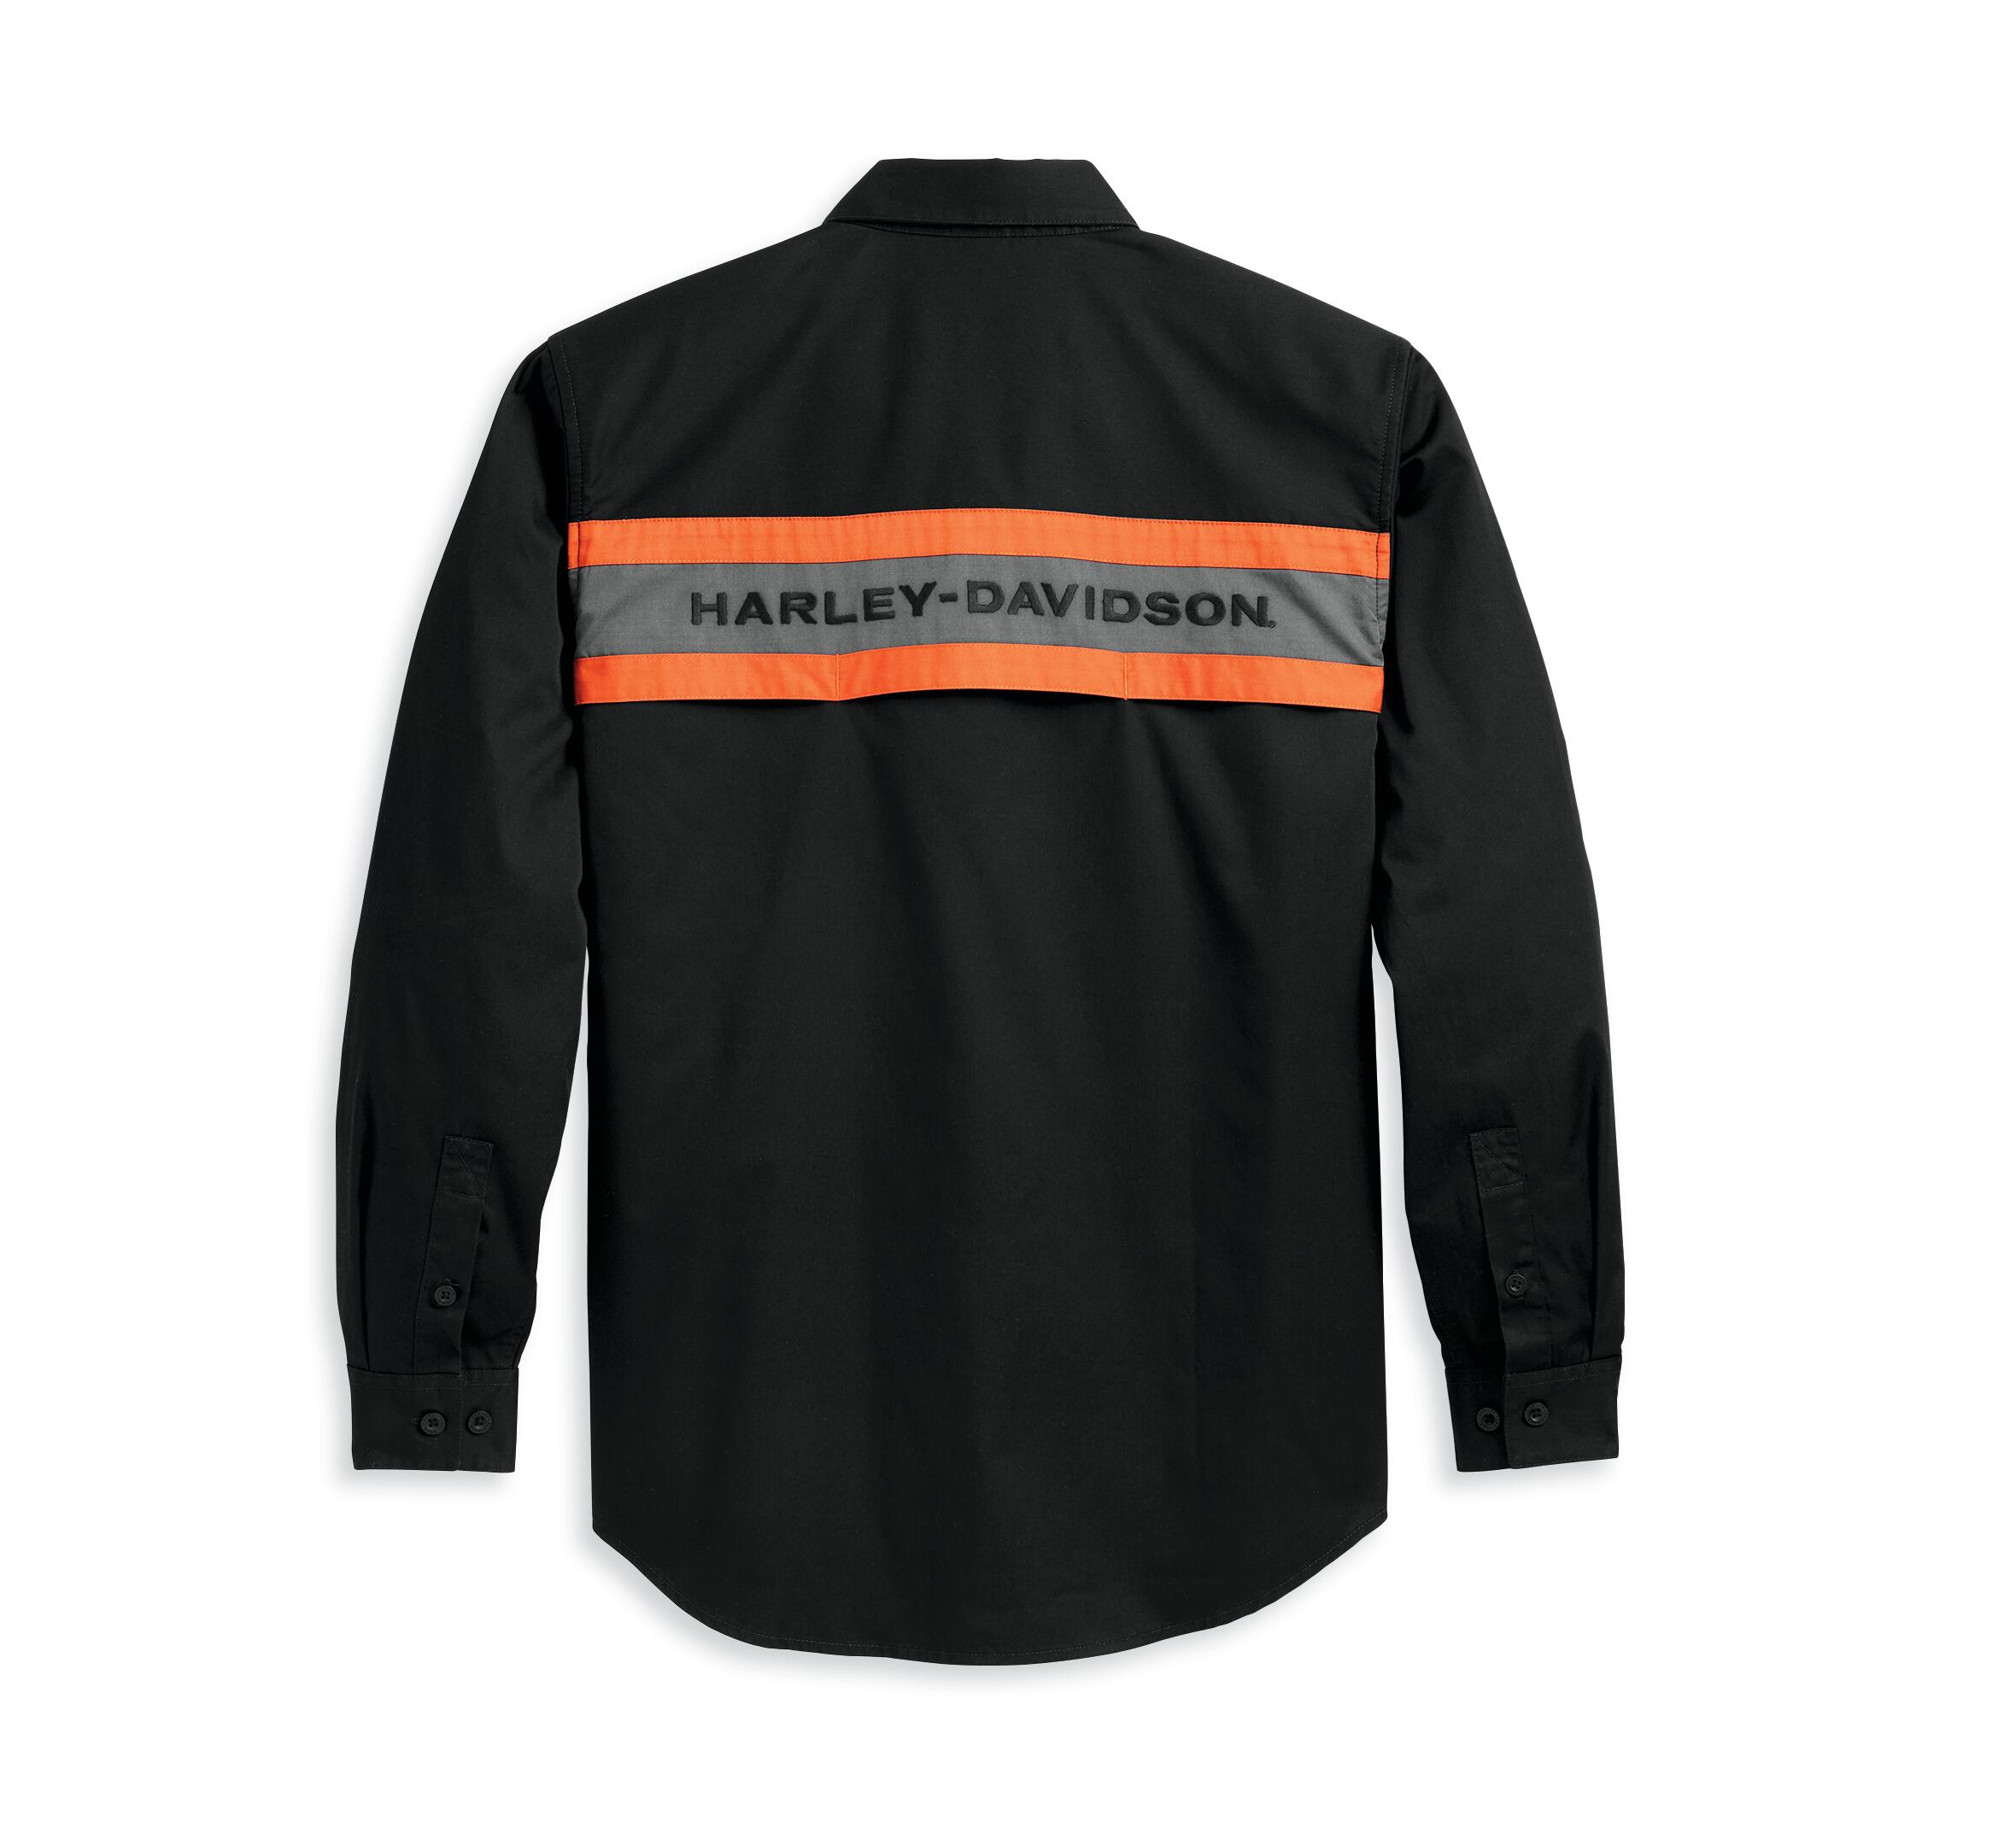 Harley-Davidson Men's Harley Performance Shirt Colorblocked, Black - 96127-23VM